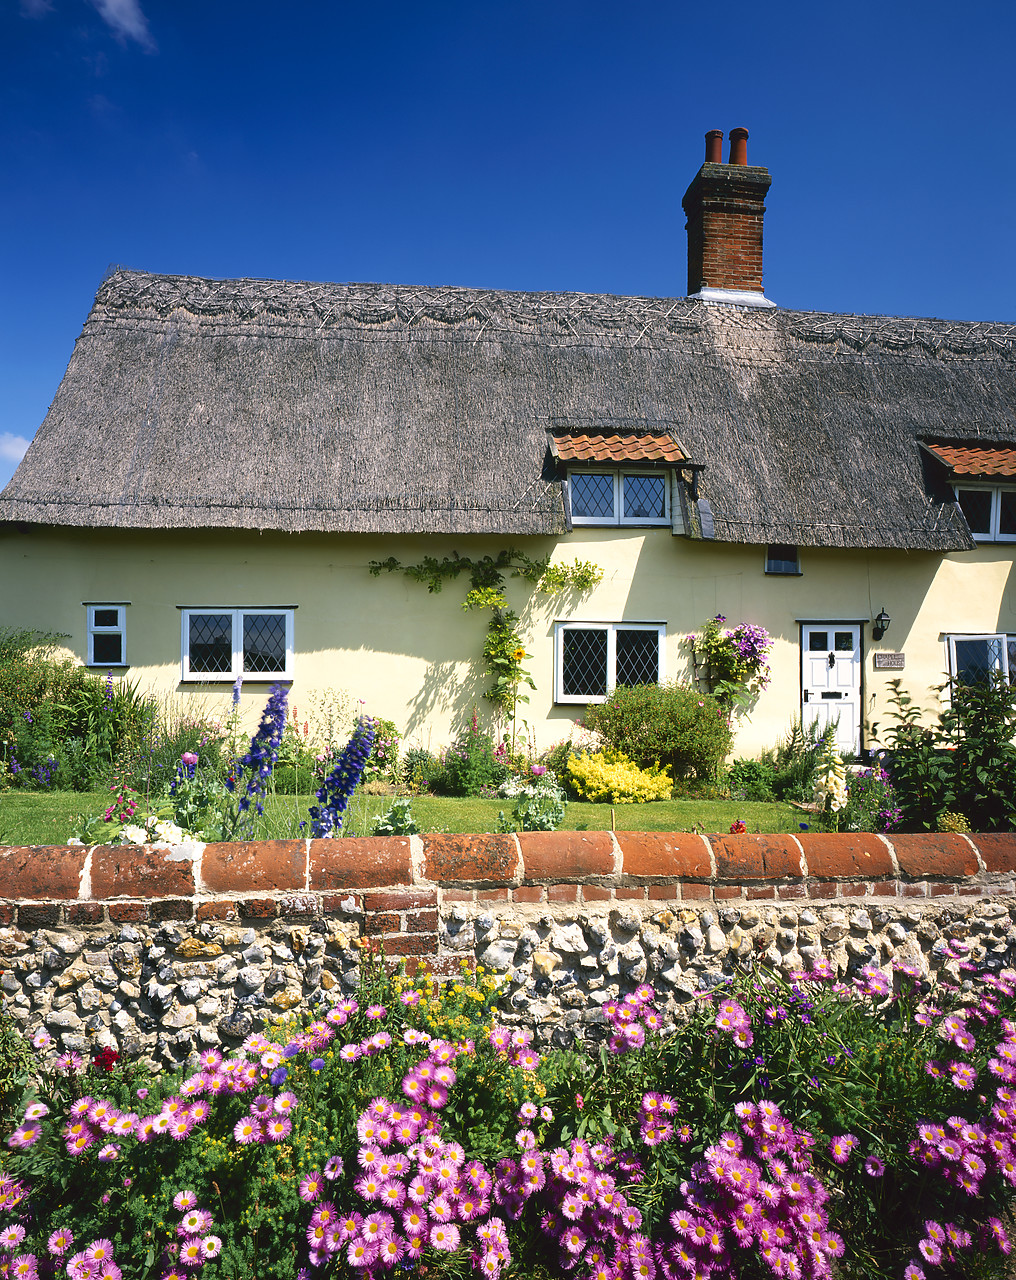 #030133-3 - Thatched Cottage & Garden, Redgrave, Suffolk, England